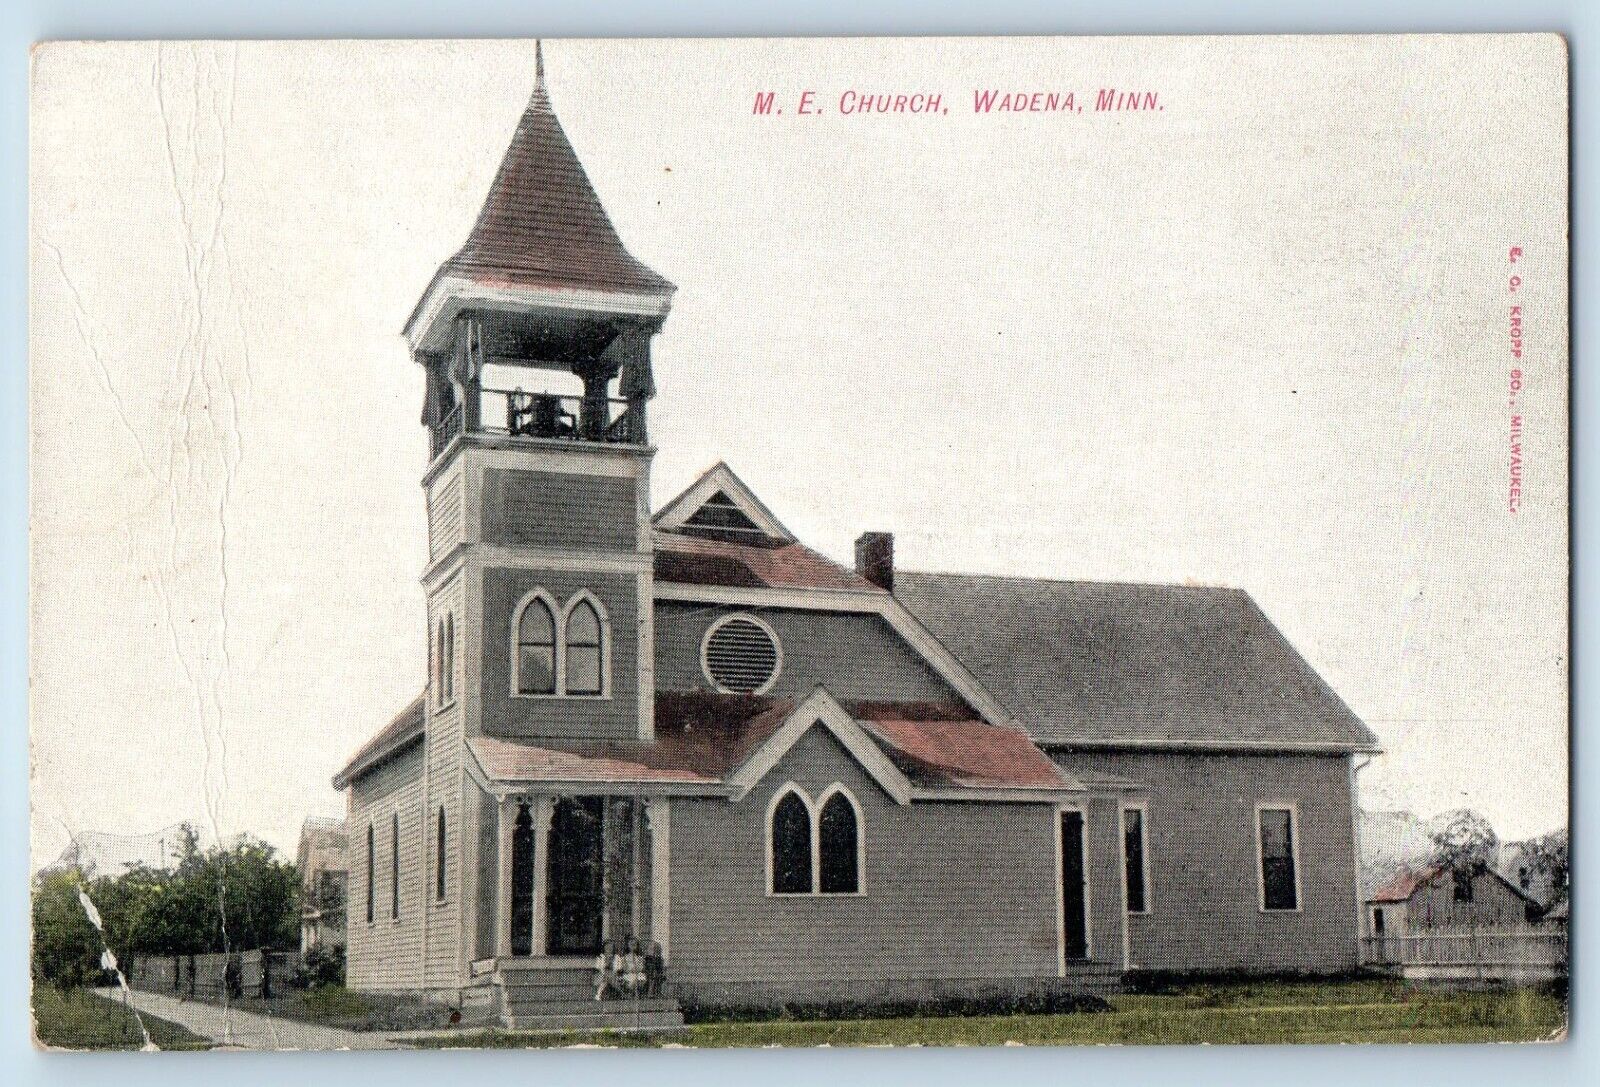 Wadena Minnesota Postcard ME Church Building Exterior View 1910 Vintage Unposted